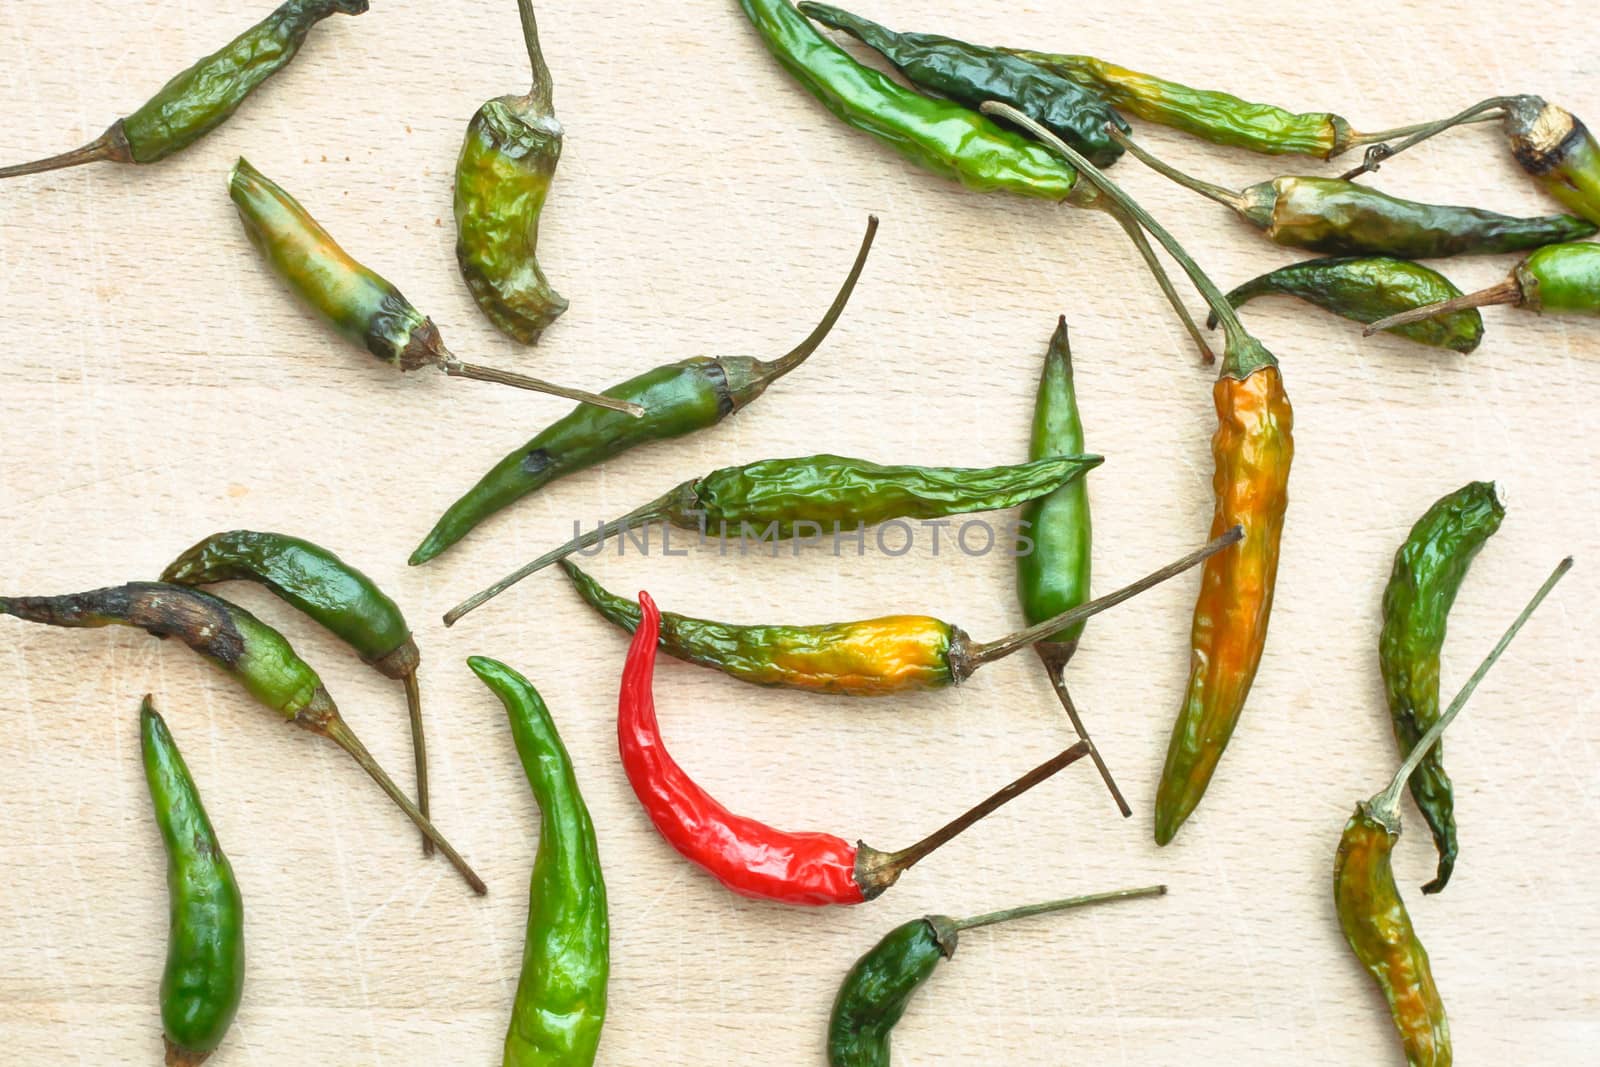 Chili peppers by trgowanlock